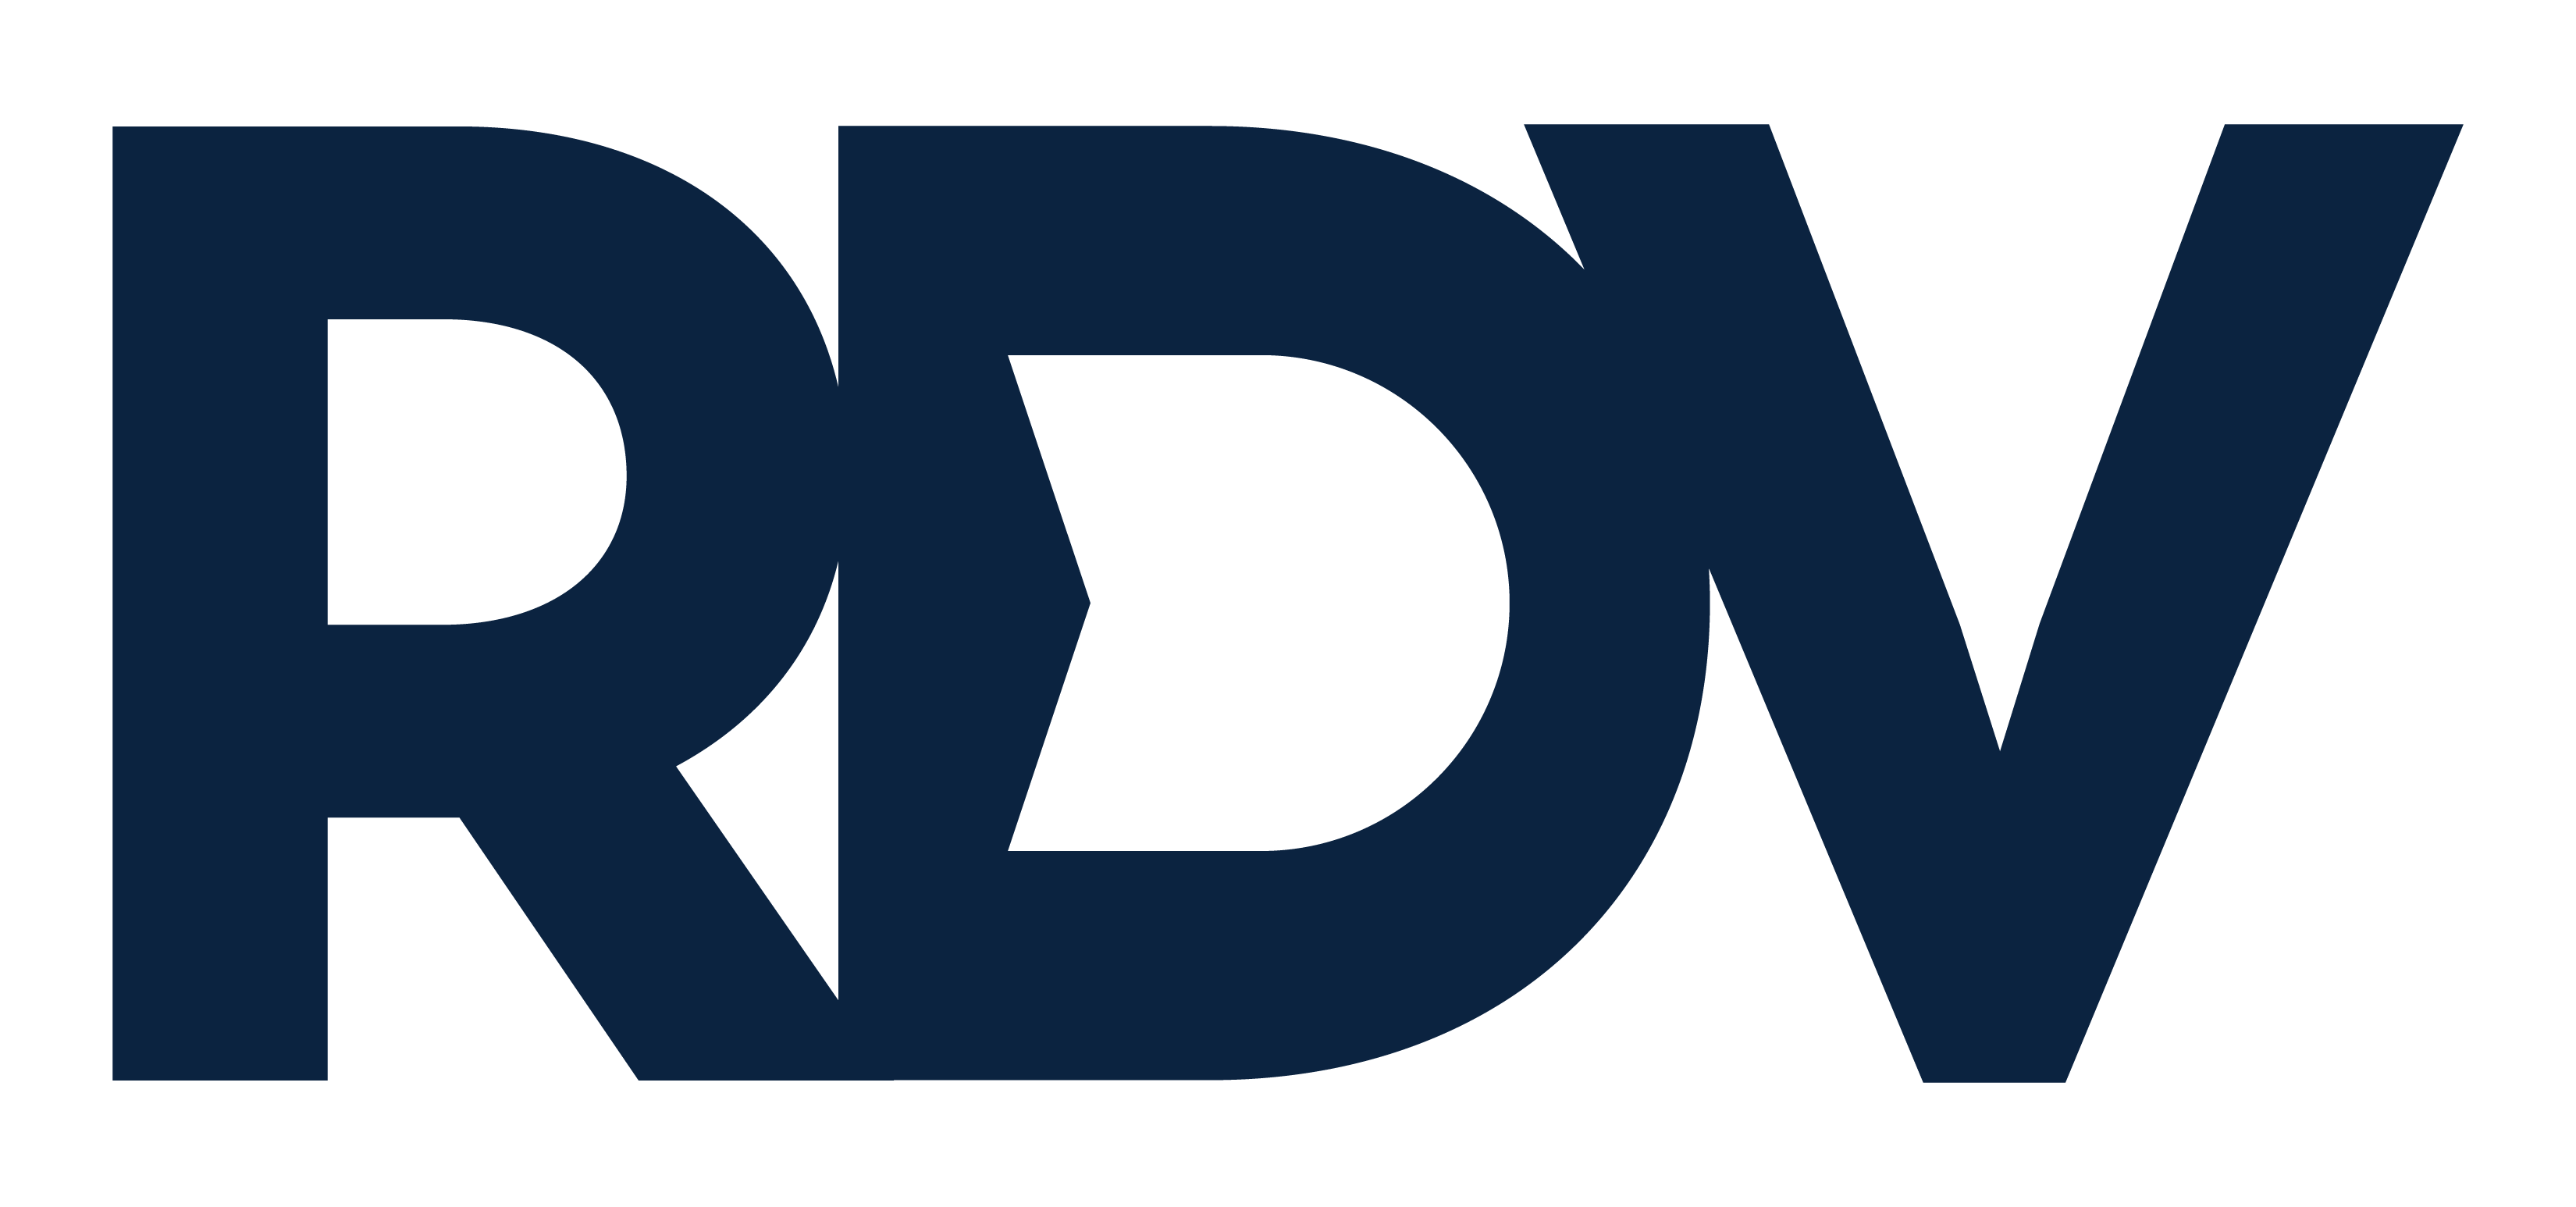 RDV Corporation